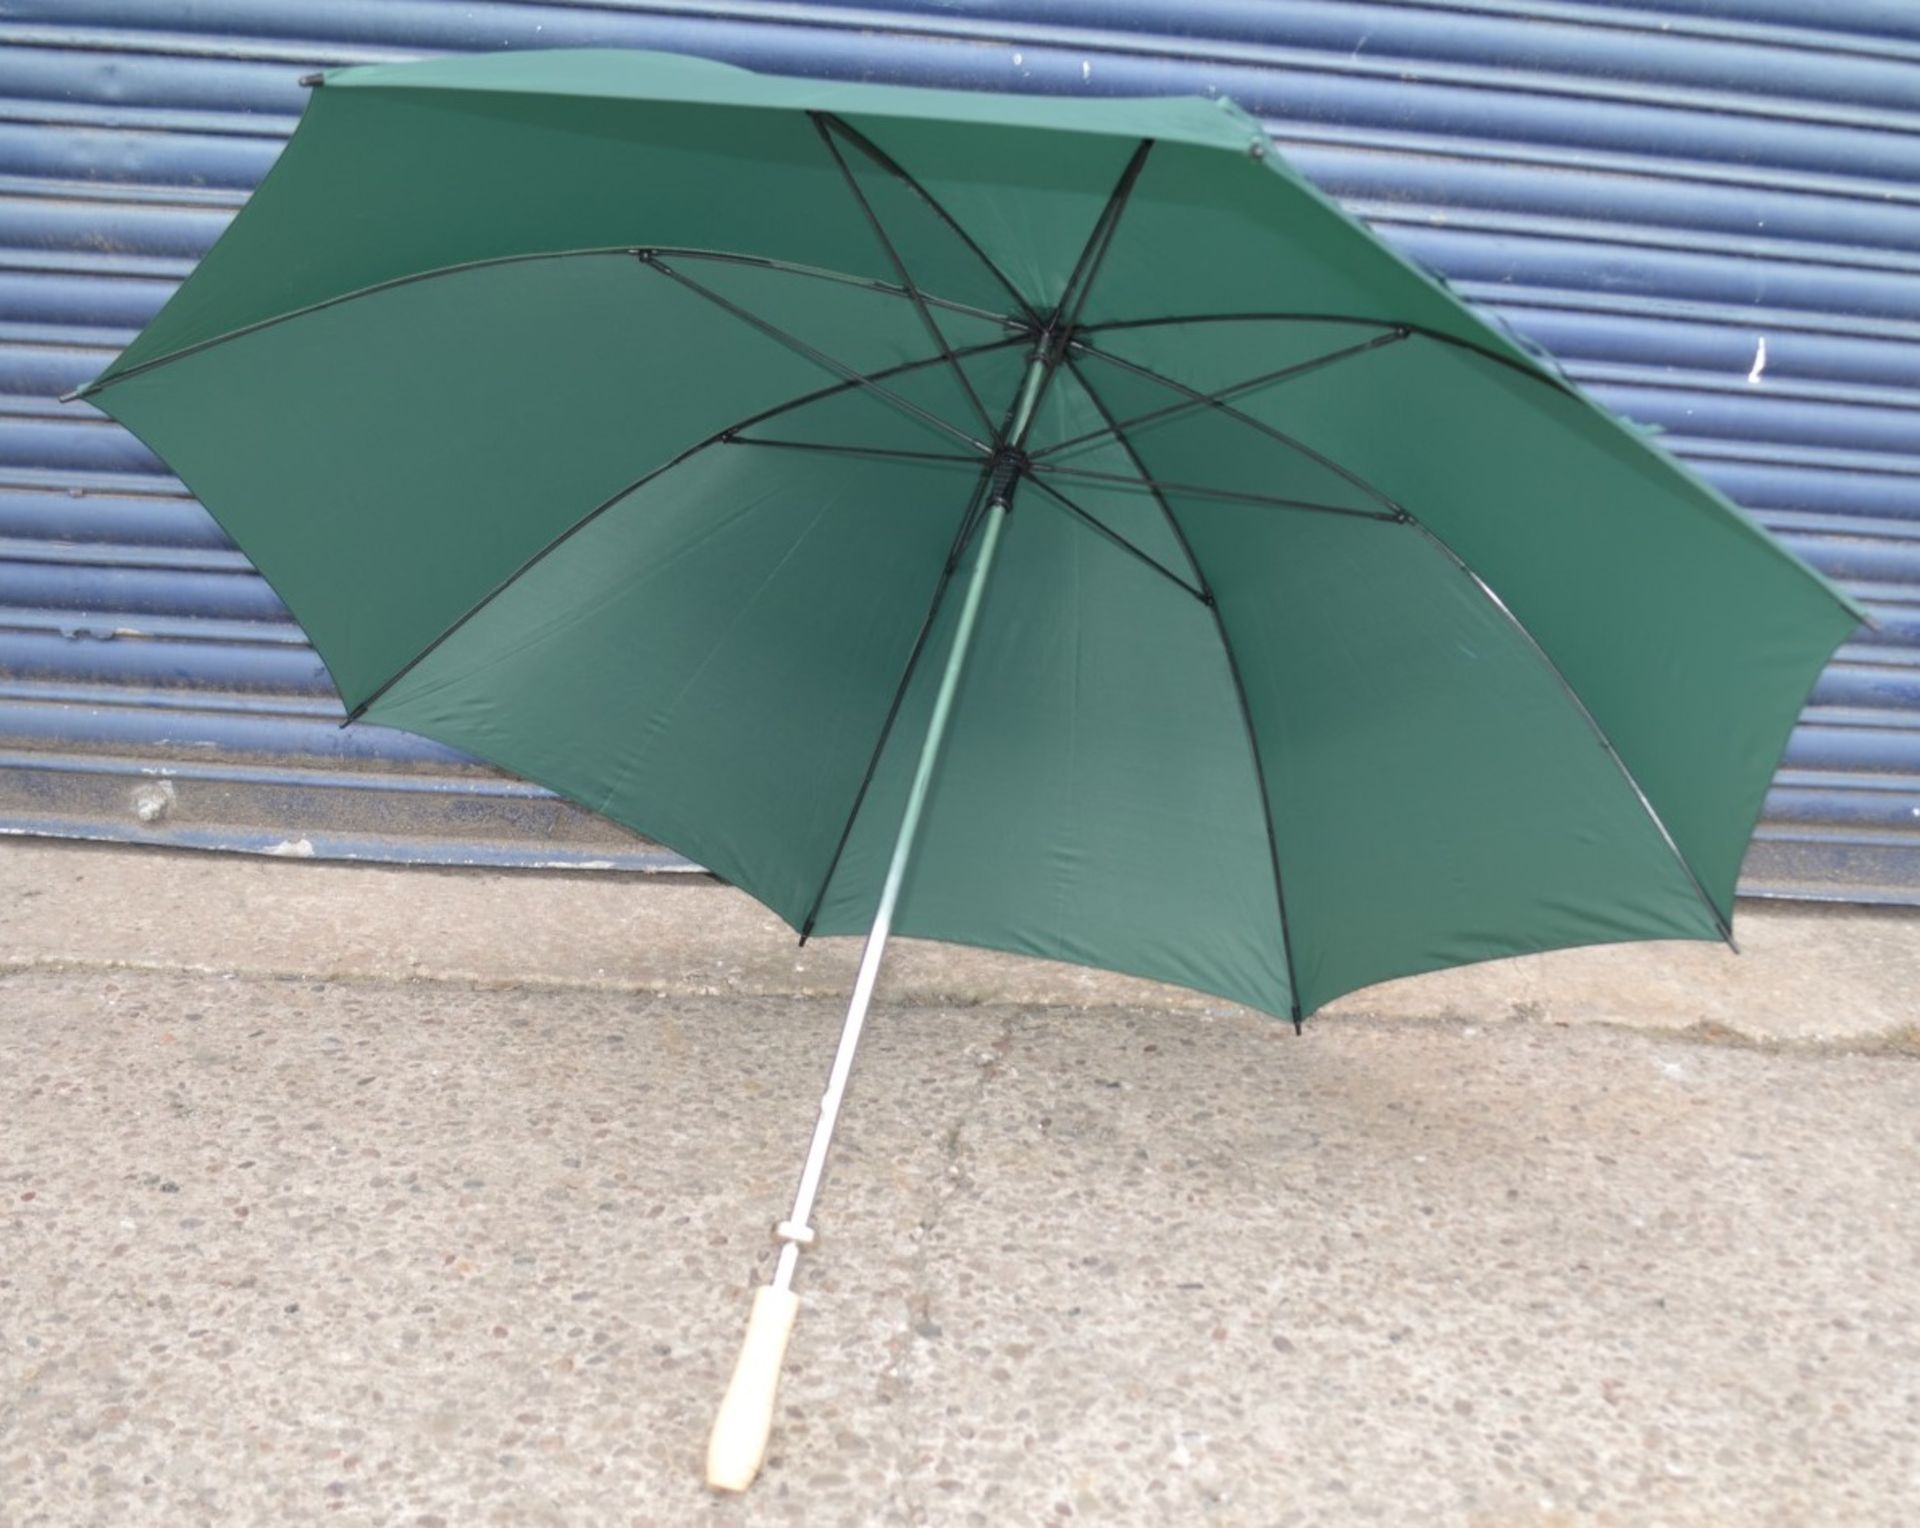 24 x Proline Golf Umbrellas - Colour: Plain Black - Brand New Sealed Stock - Dimensions: Length - Image 4 of 5